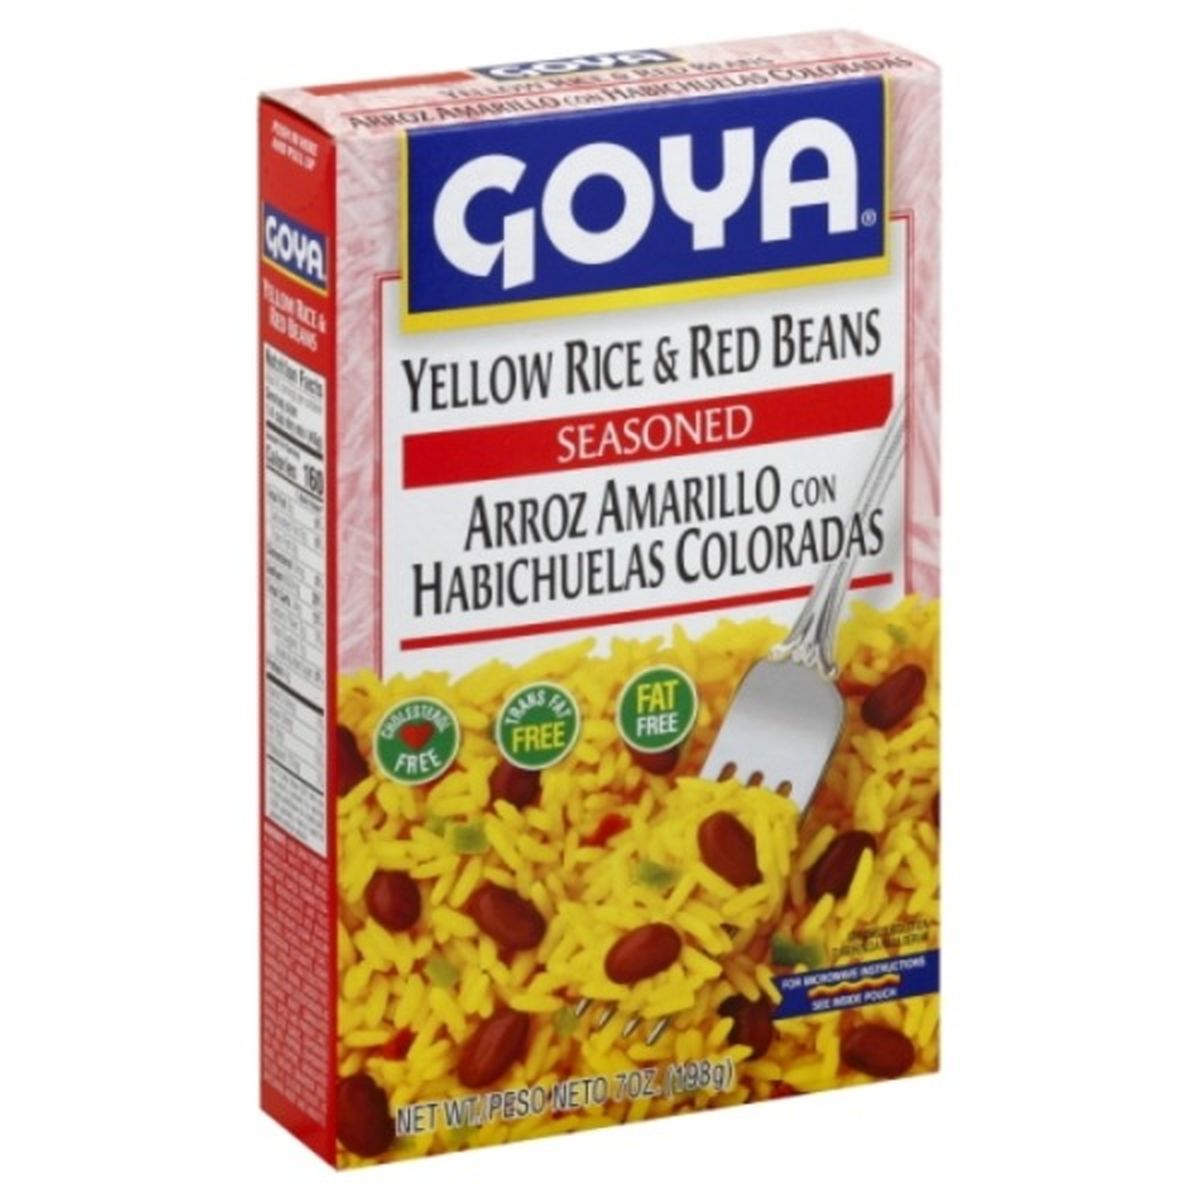 Calories in Goya Yellow Rice & Red Beans, Seasoned